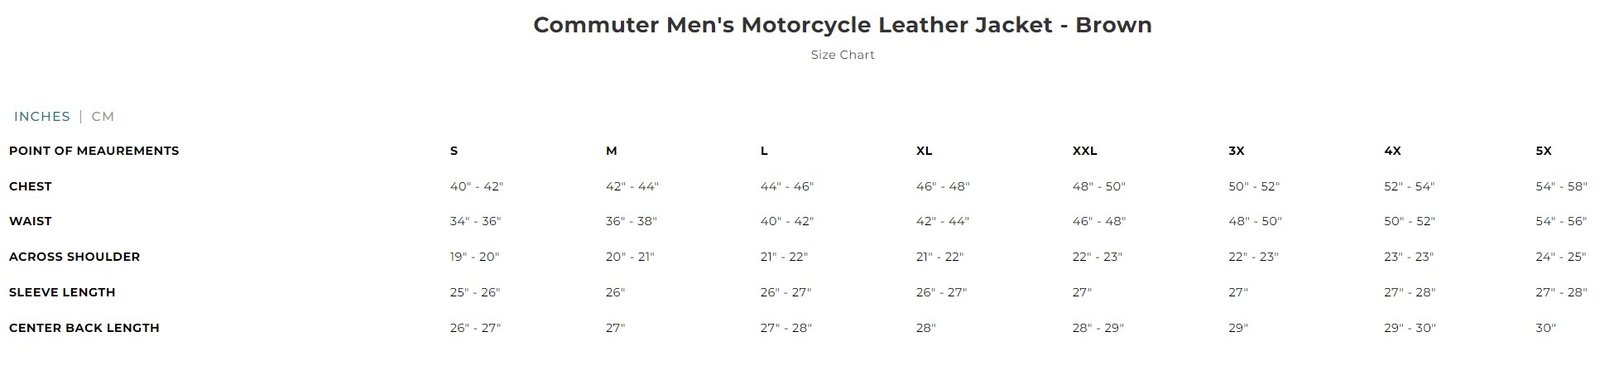 Leather Motorcycle Jacket - Men's - Brown - Commuter - FIM277CVZ-FM